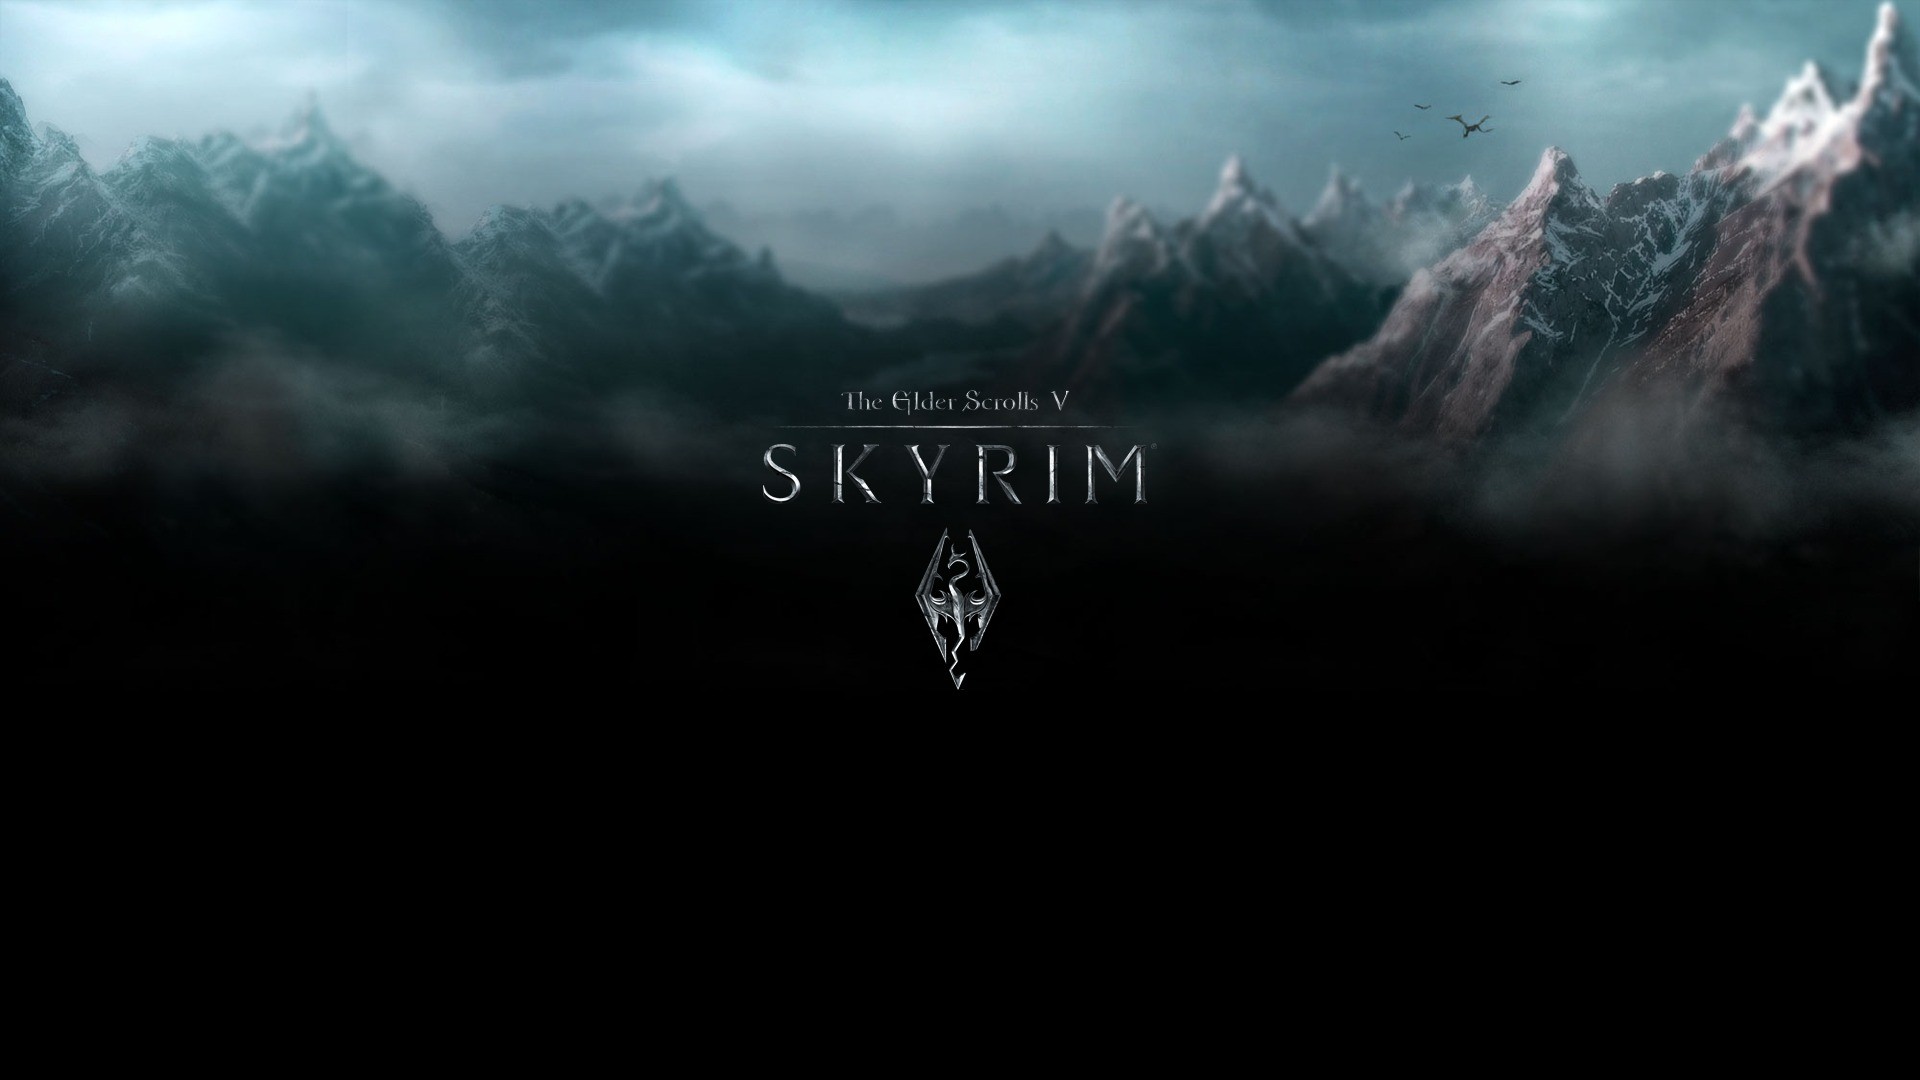 1920x1080 Wallpaper The Elder Scrolls V: Skyrim logo and mountains